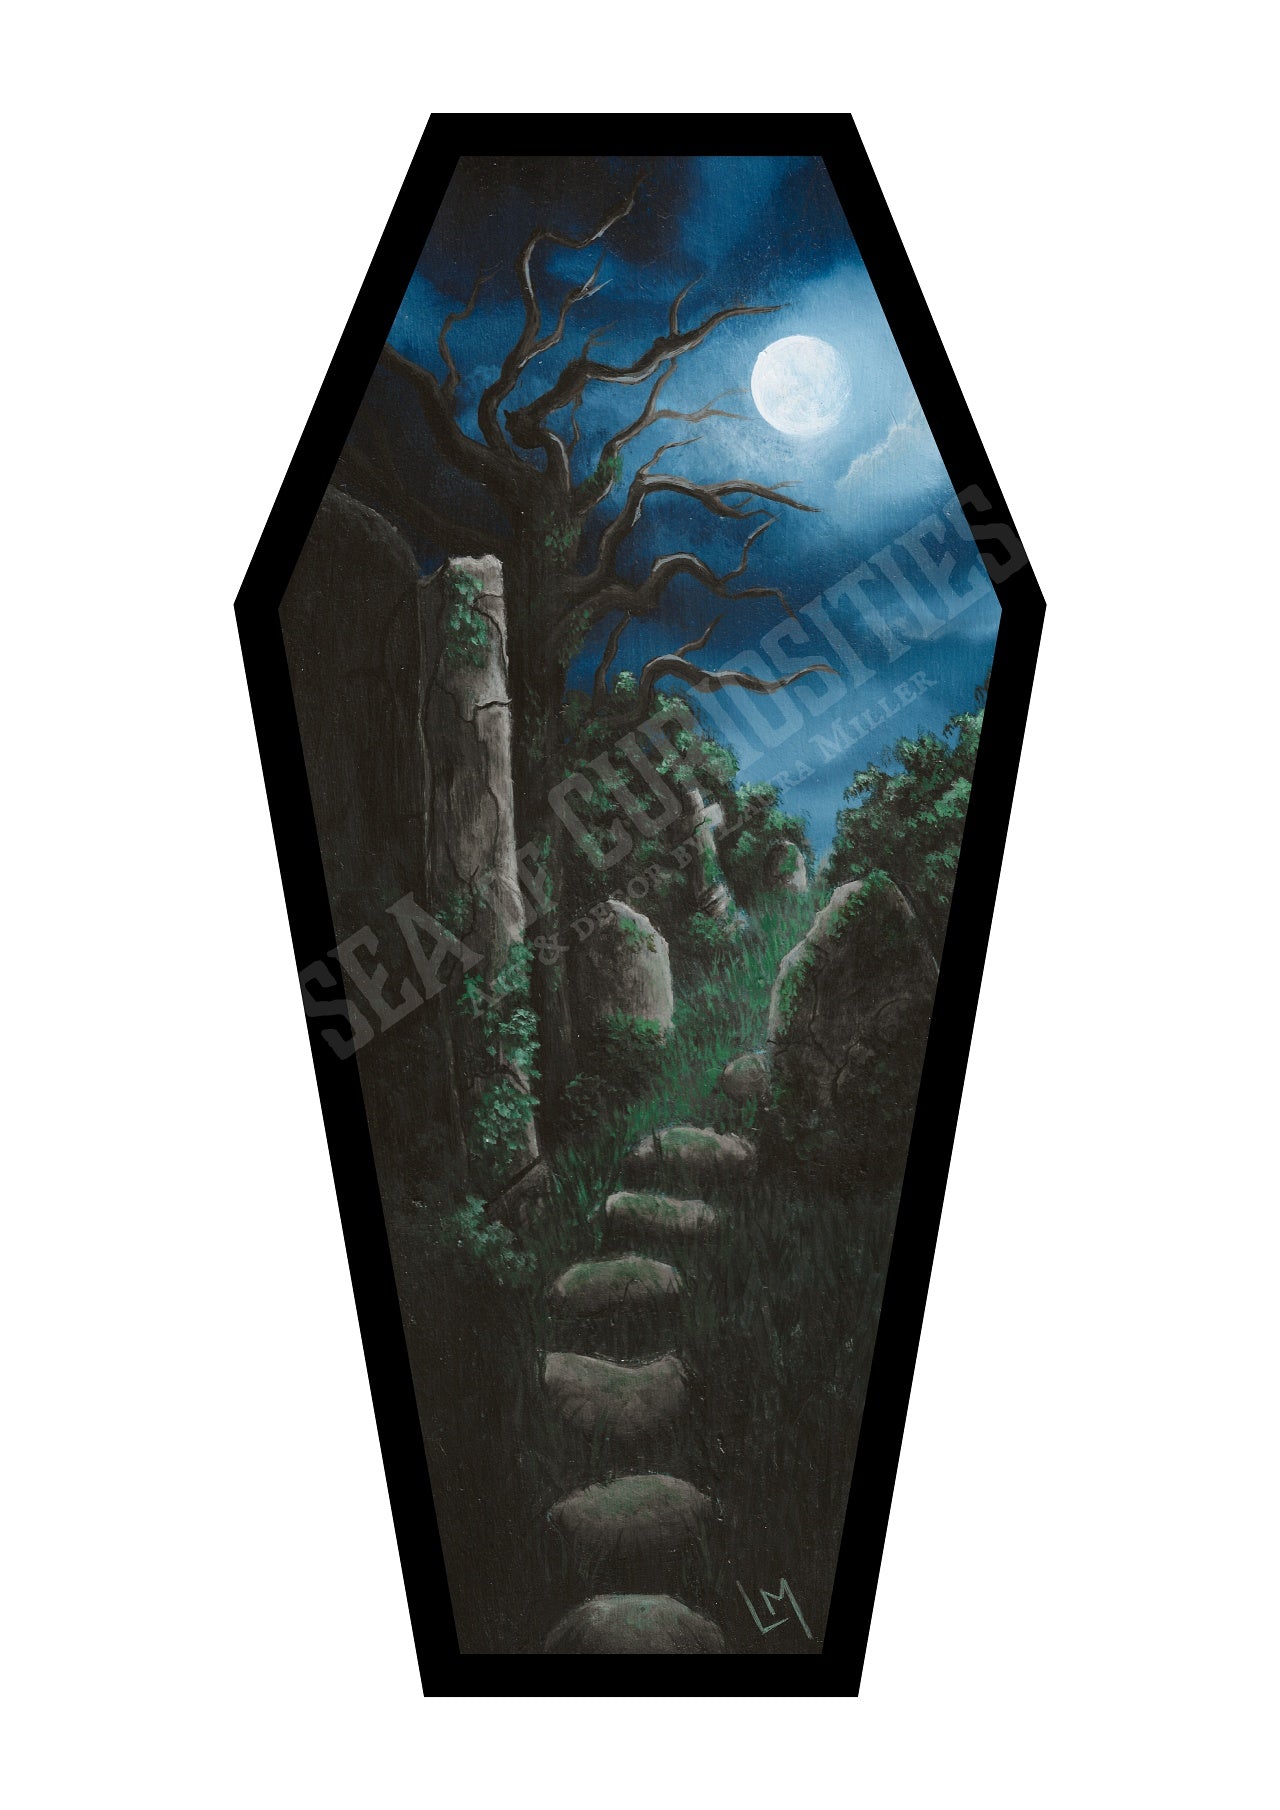 Moonlit embrace of forgotten souls - Forgotten Tombs series - Art Print